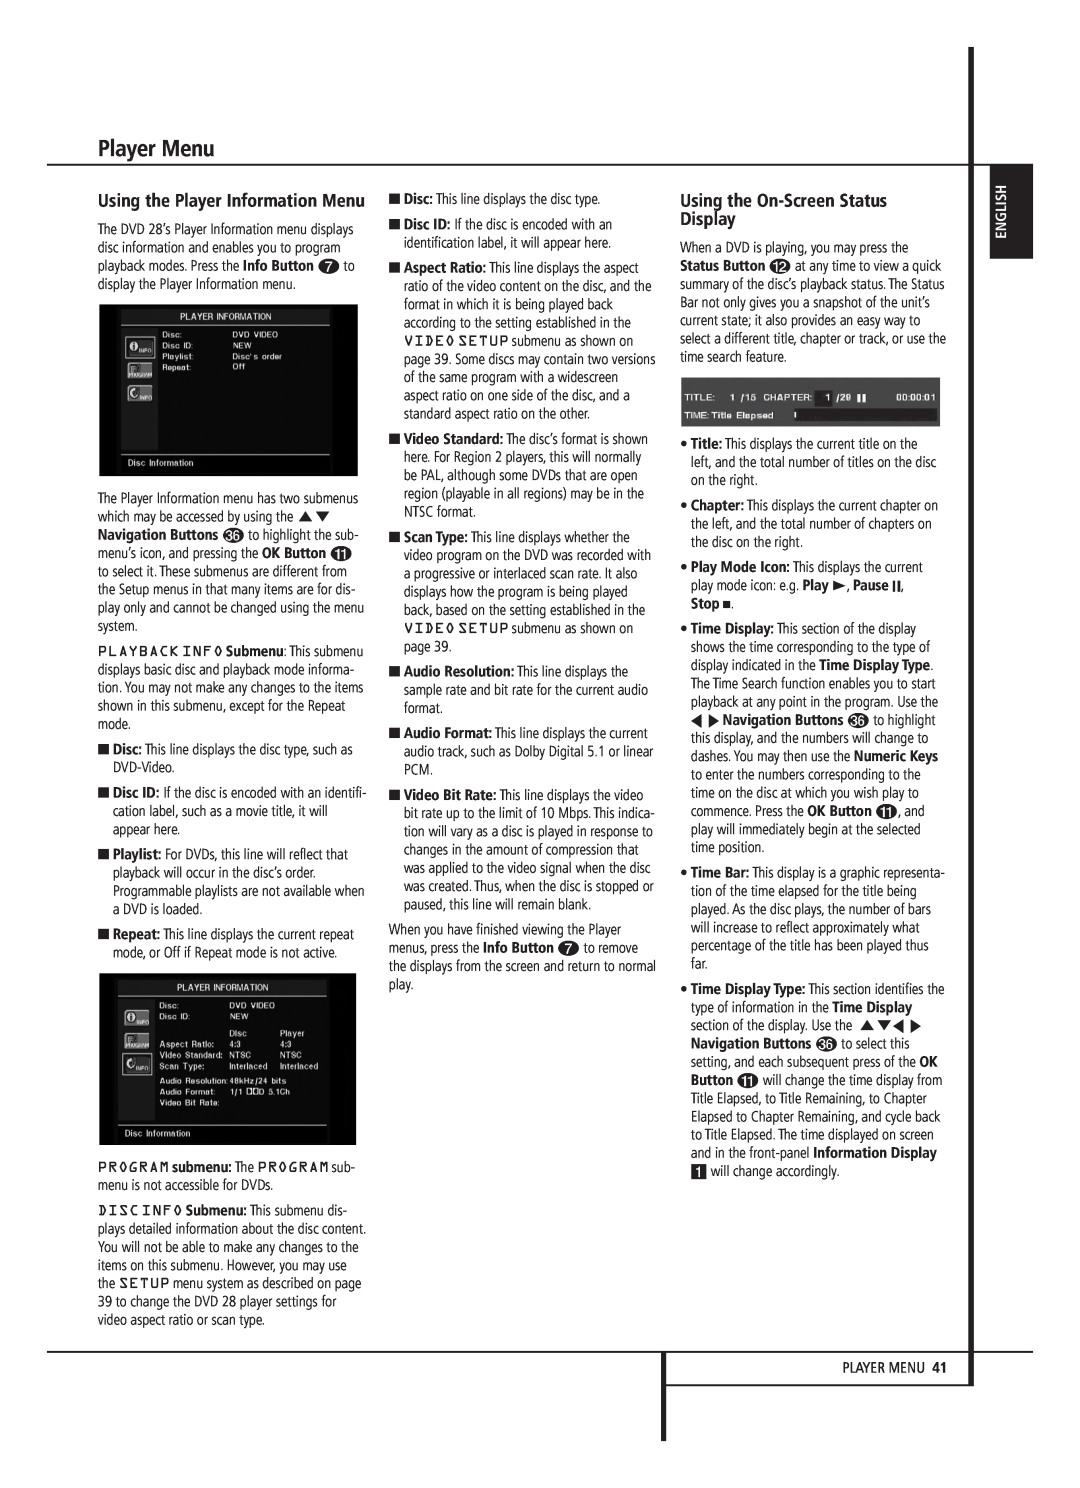 Harman-Kardon 13828 owner manual Player Menu, Using the On-ScreenStatus Display, Using the Player Information Menu, English 